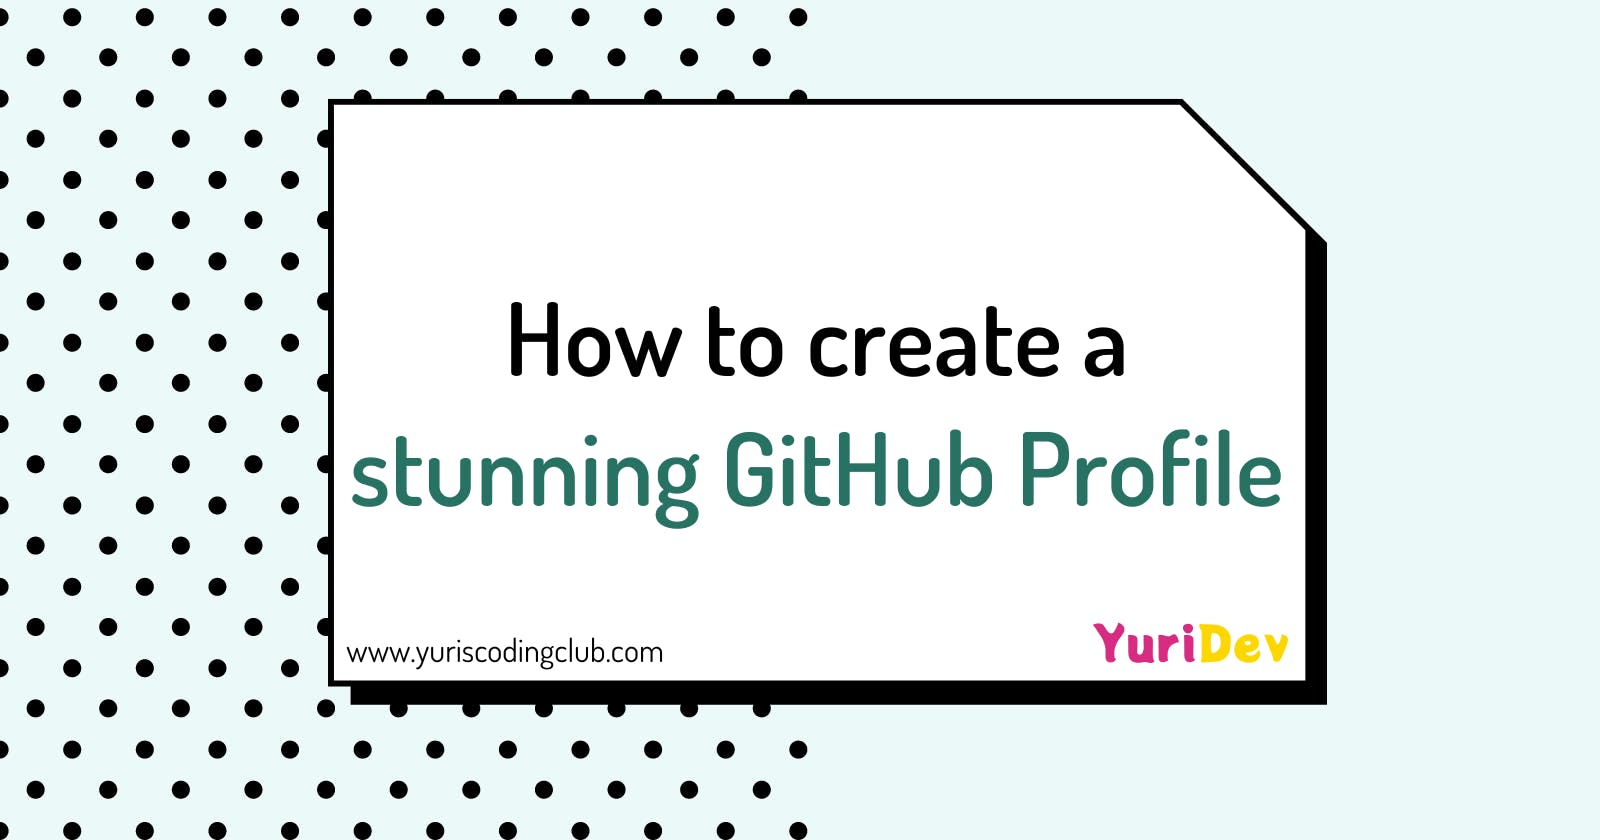 How to create a stunning GitHub Profile